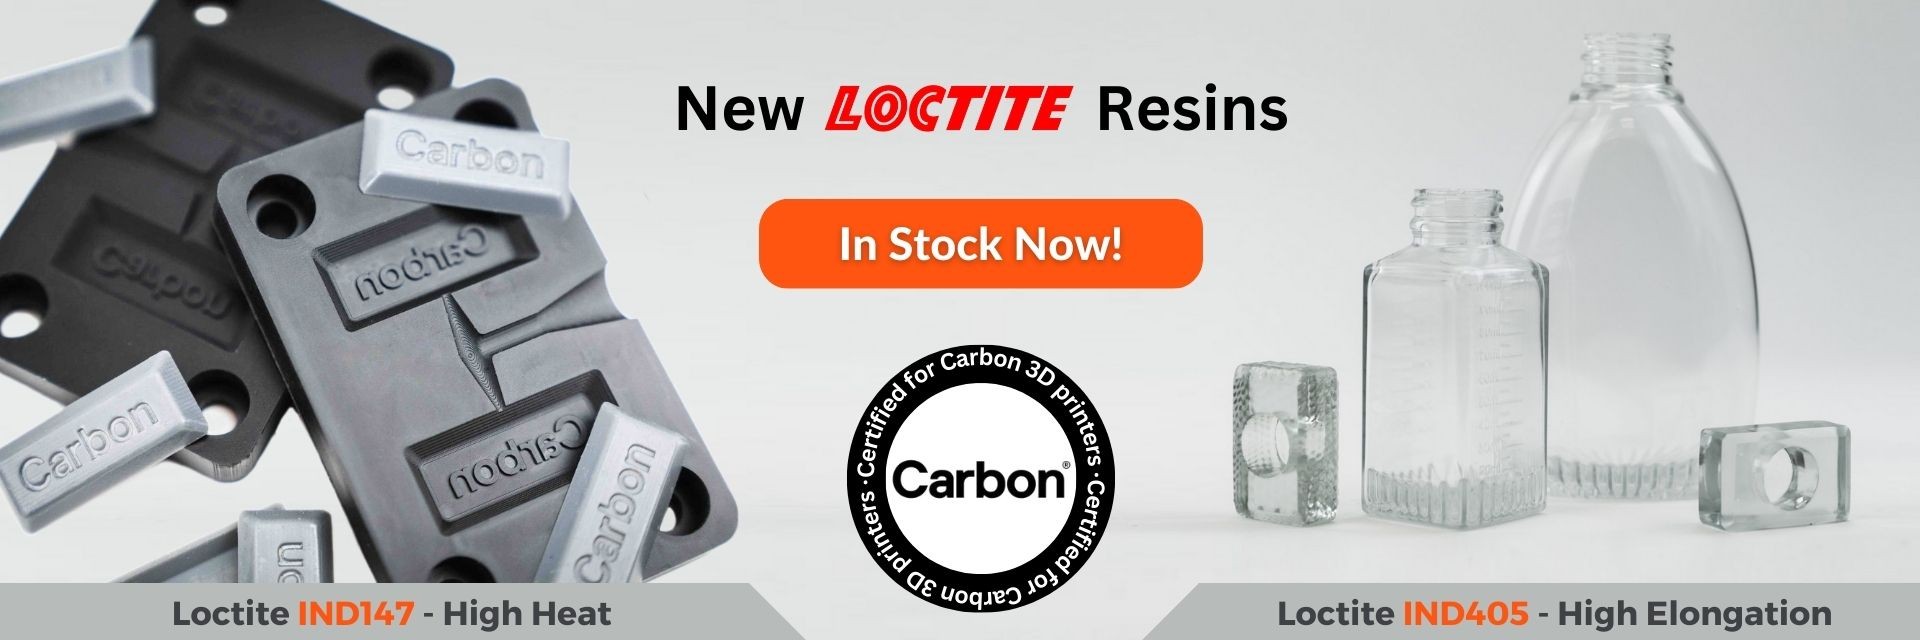 Loctite Carbon Resins